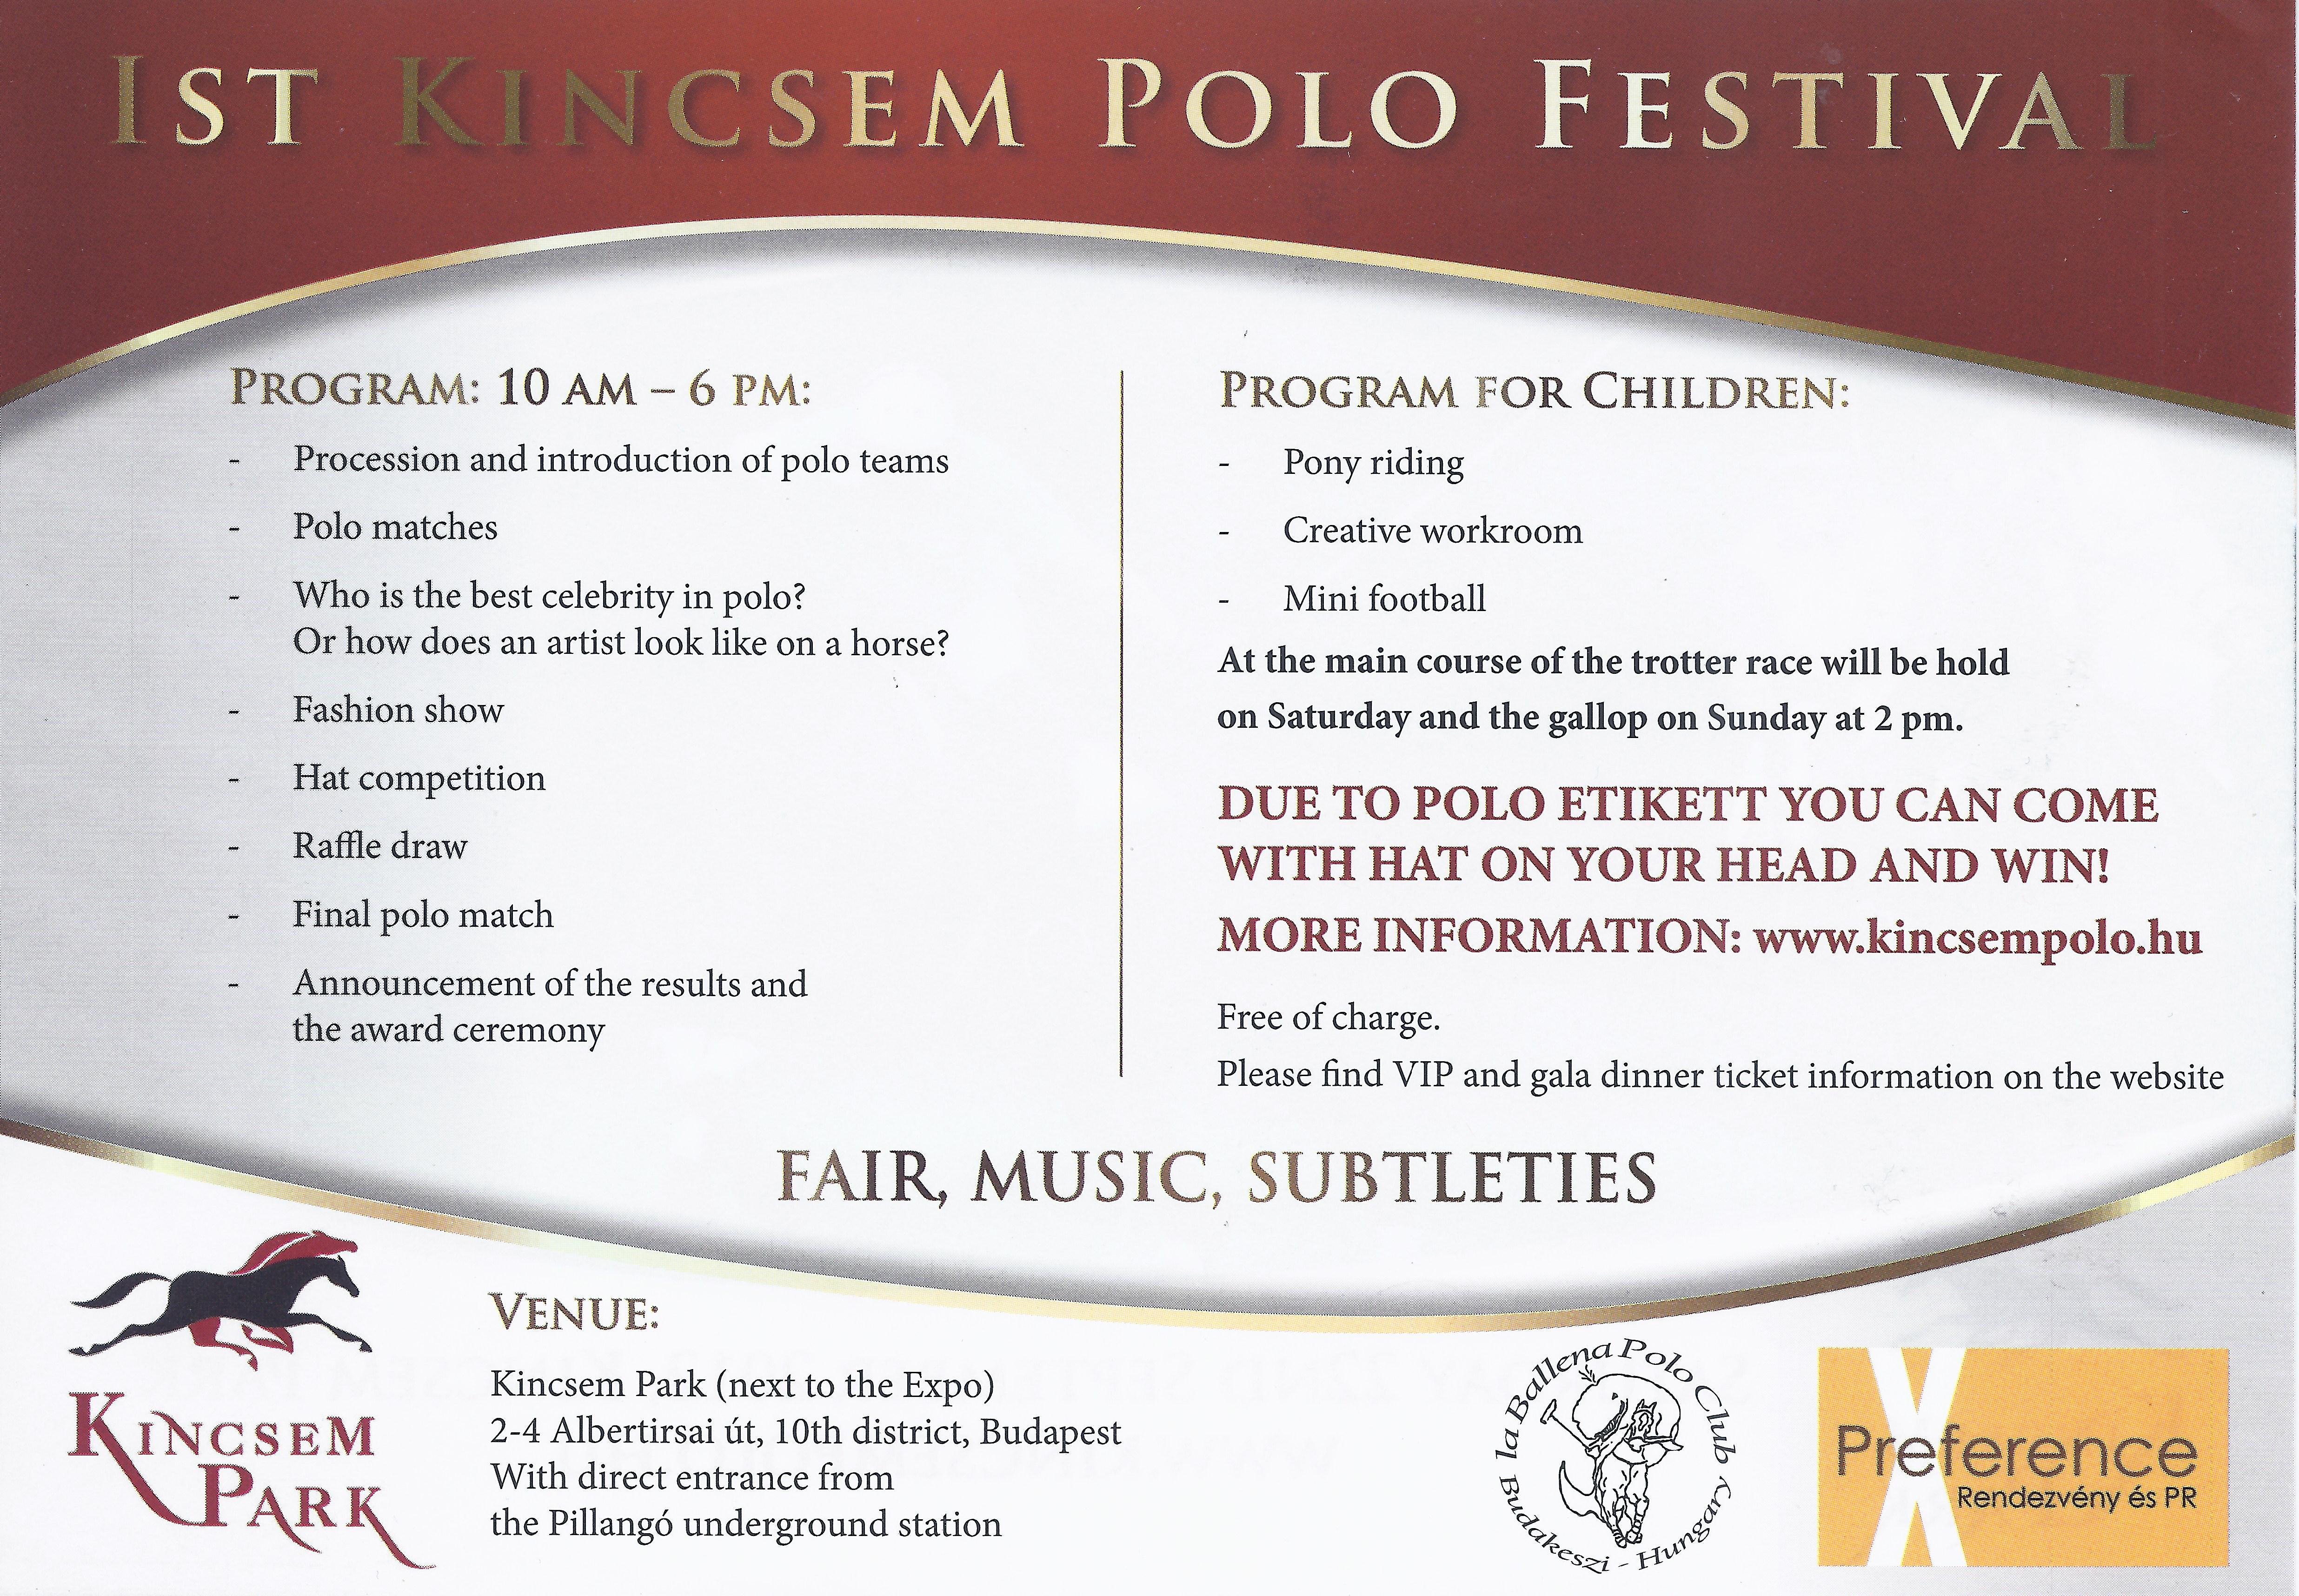 Updated: Kincsem Polo Festival, Budapest - Cancelled